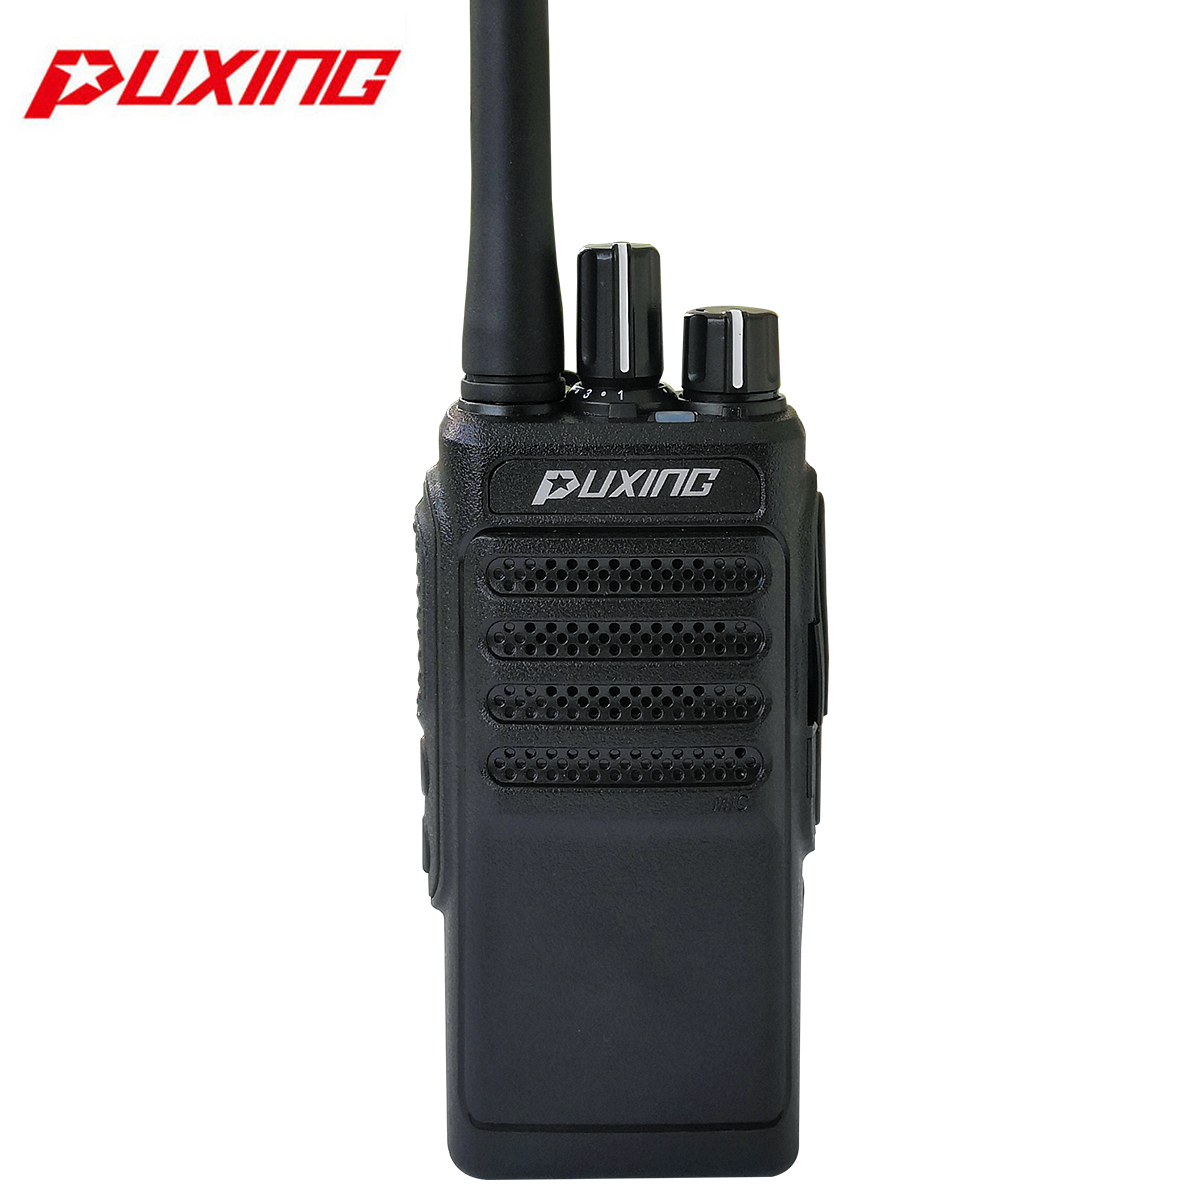 PD250 DMR Digital Low-power Two-way Radio